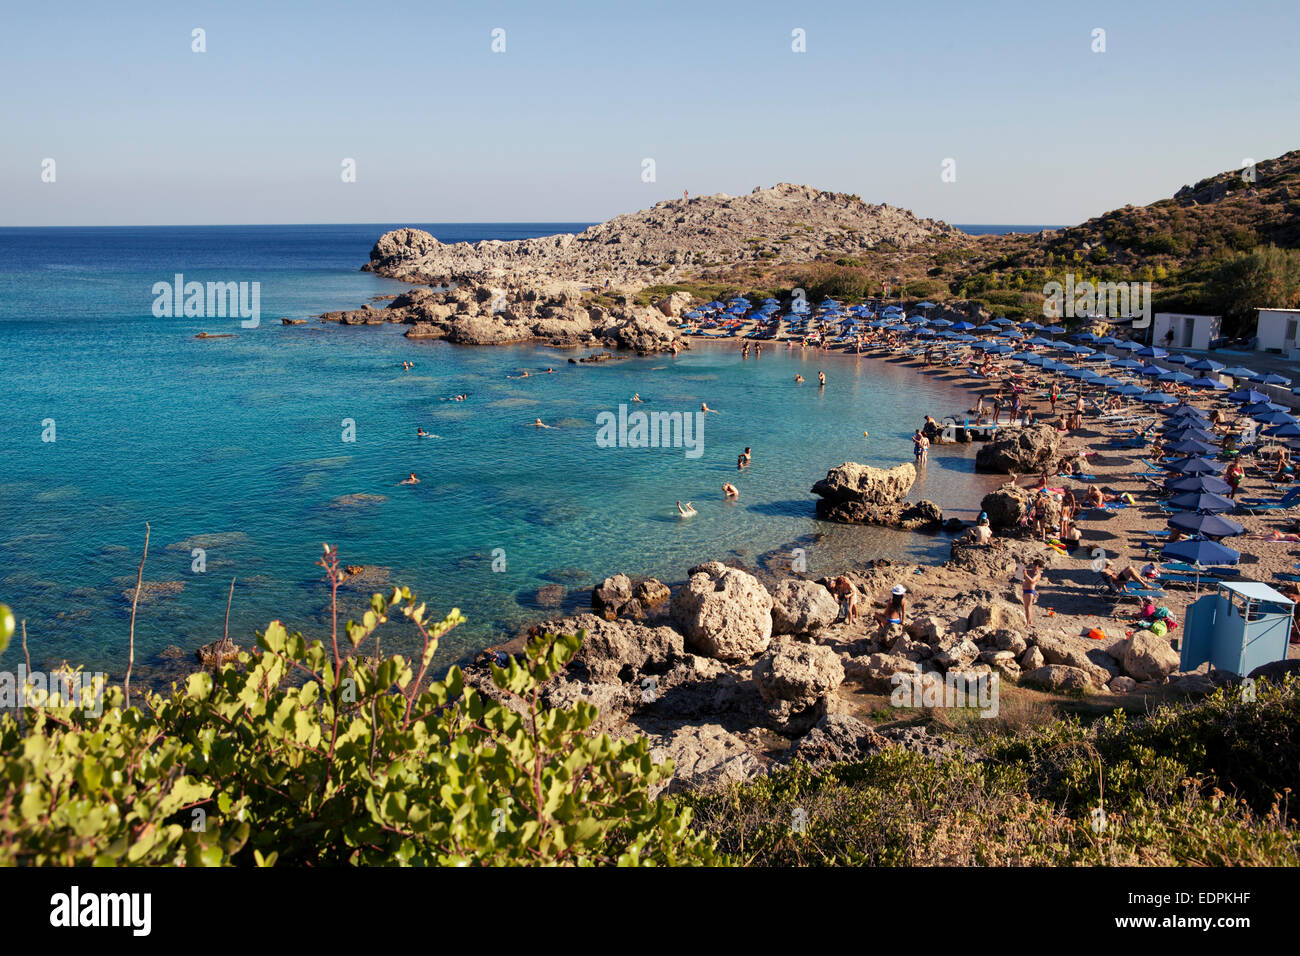 Ladiko bay beach near Faliraki, Rhodes island, Greece Stock Photo